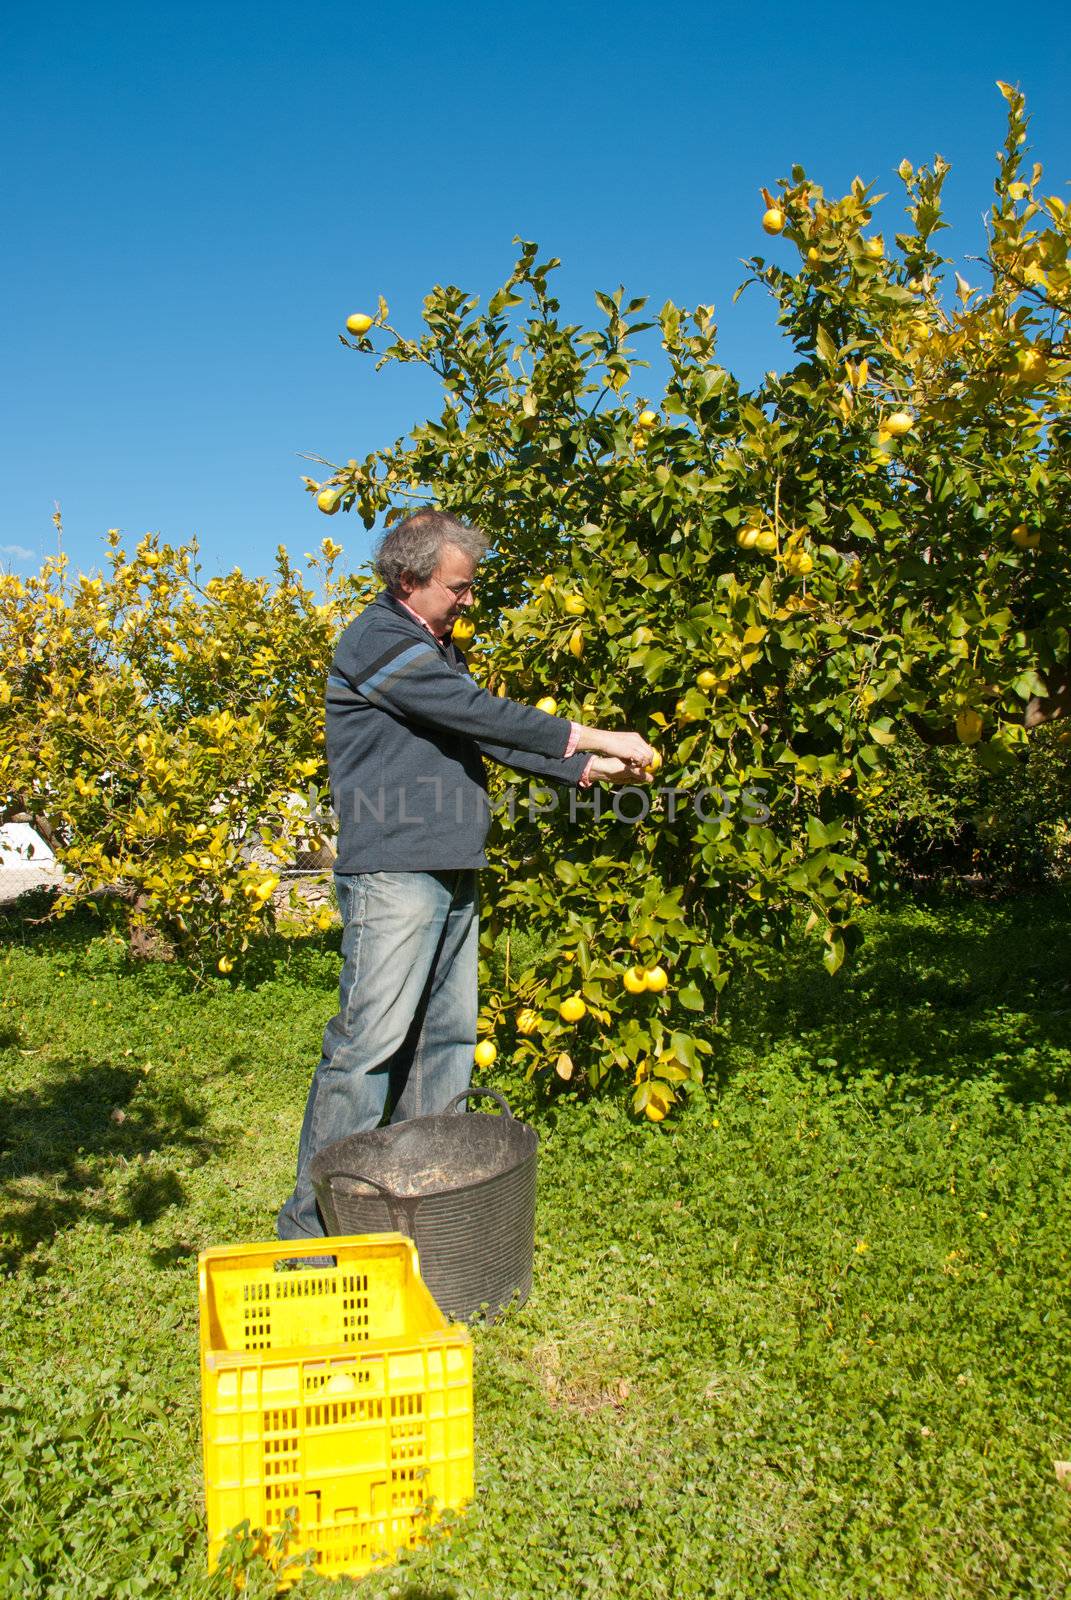 Agricultural worker picking lemons in a sunny plantation